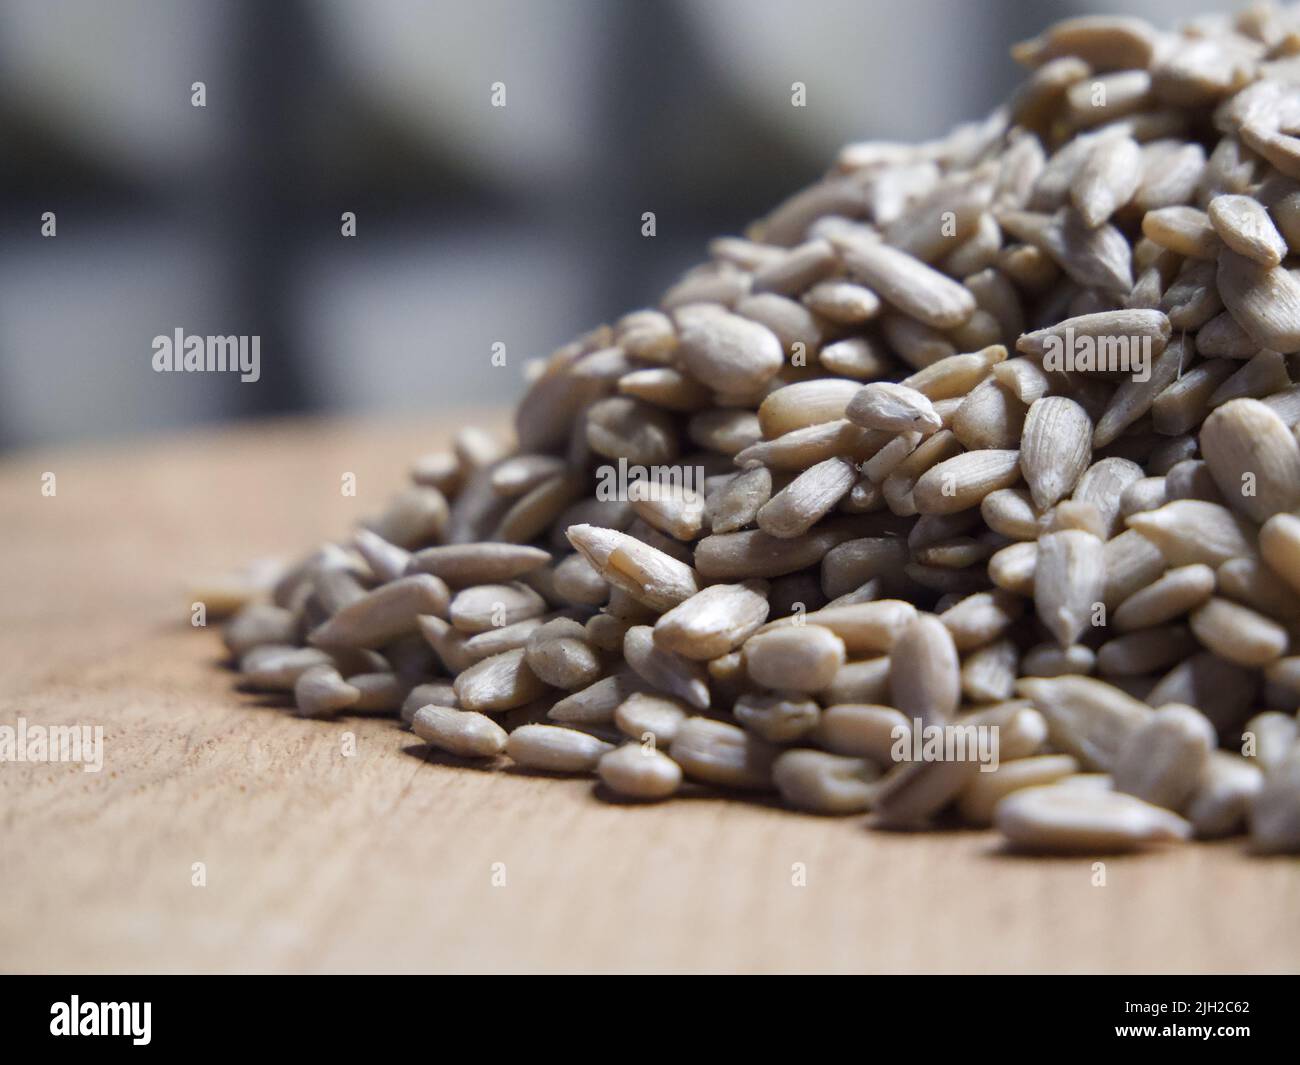 Un montón de semillas de girasol peladas sobre una superficie de madera, macro tiro. Semillas sin cáscara. Foto de stock